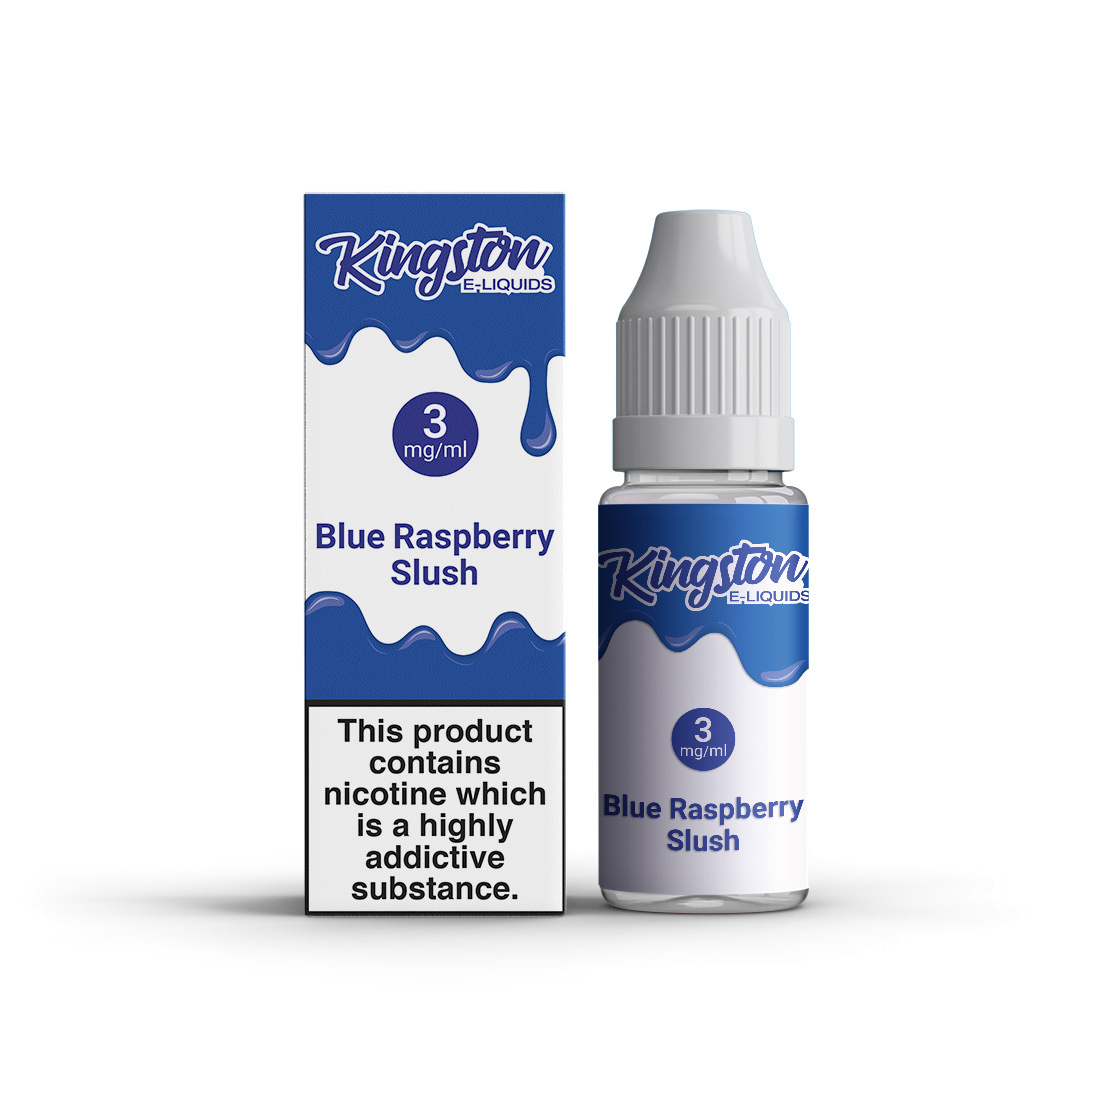 Kingston 50/50 10ml - Pack of 10 - Blue Raspberry Slush